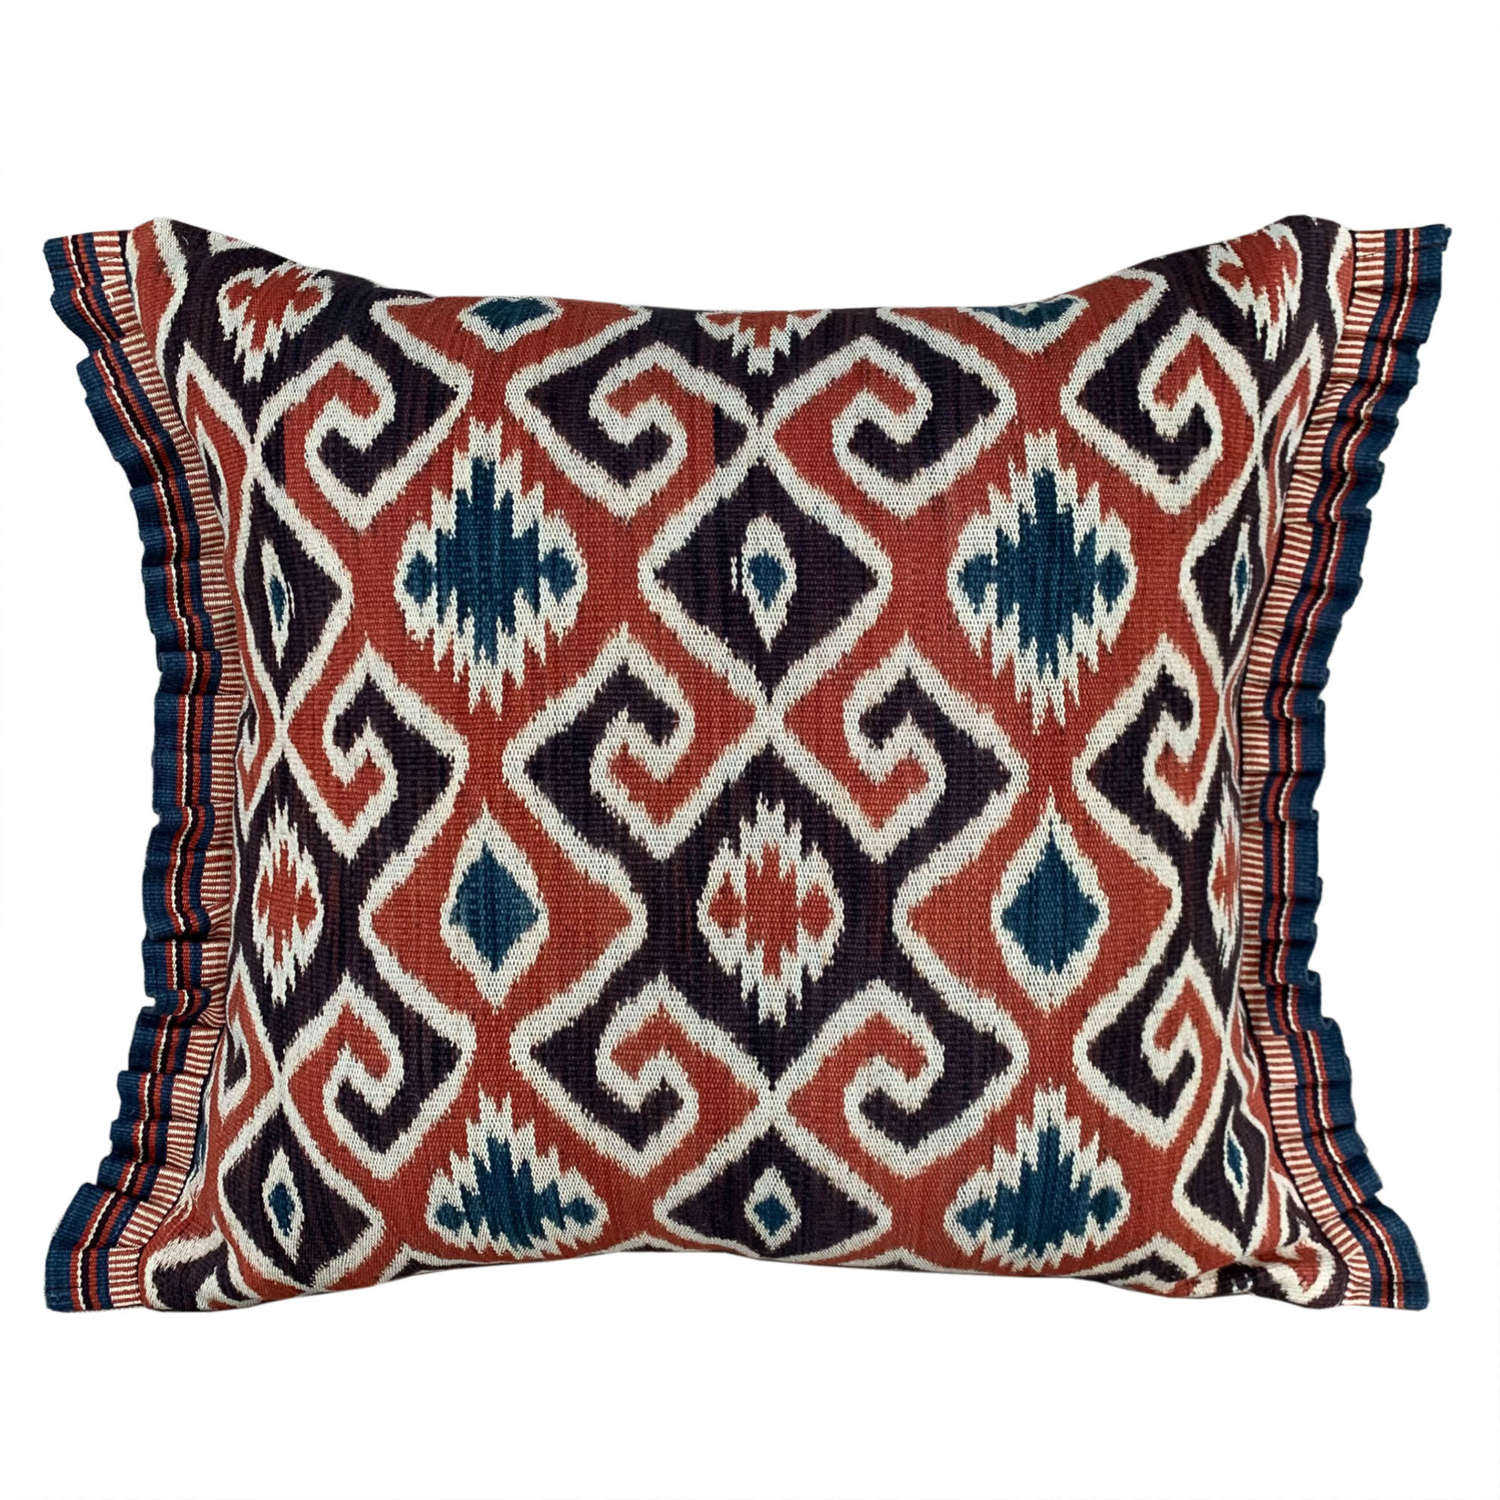 Sekomandi cushions with pleated sides